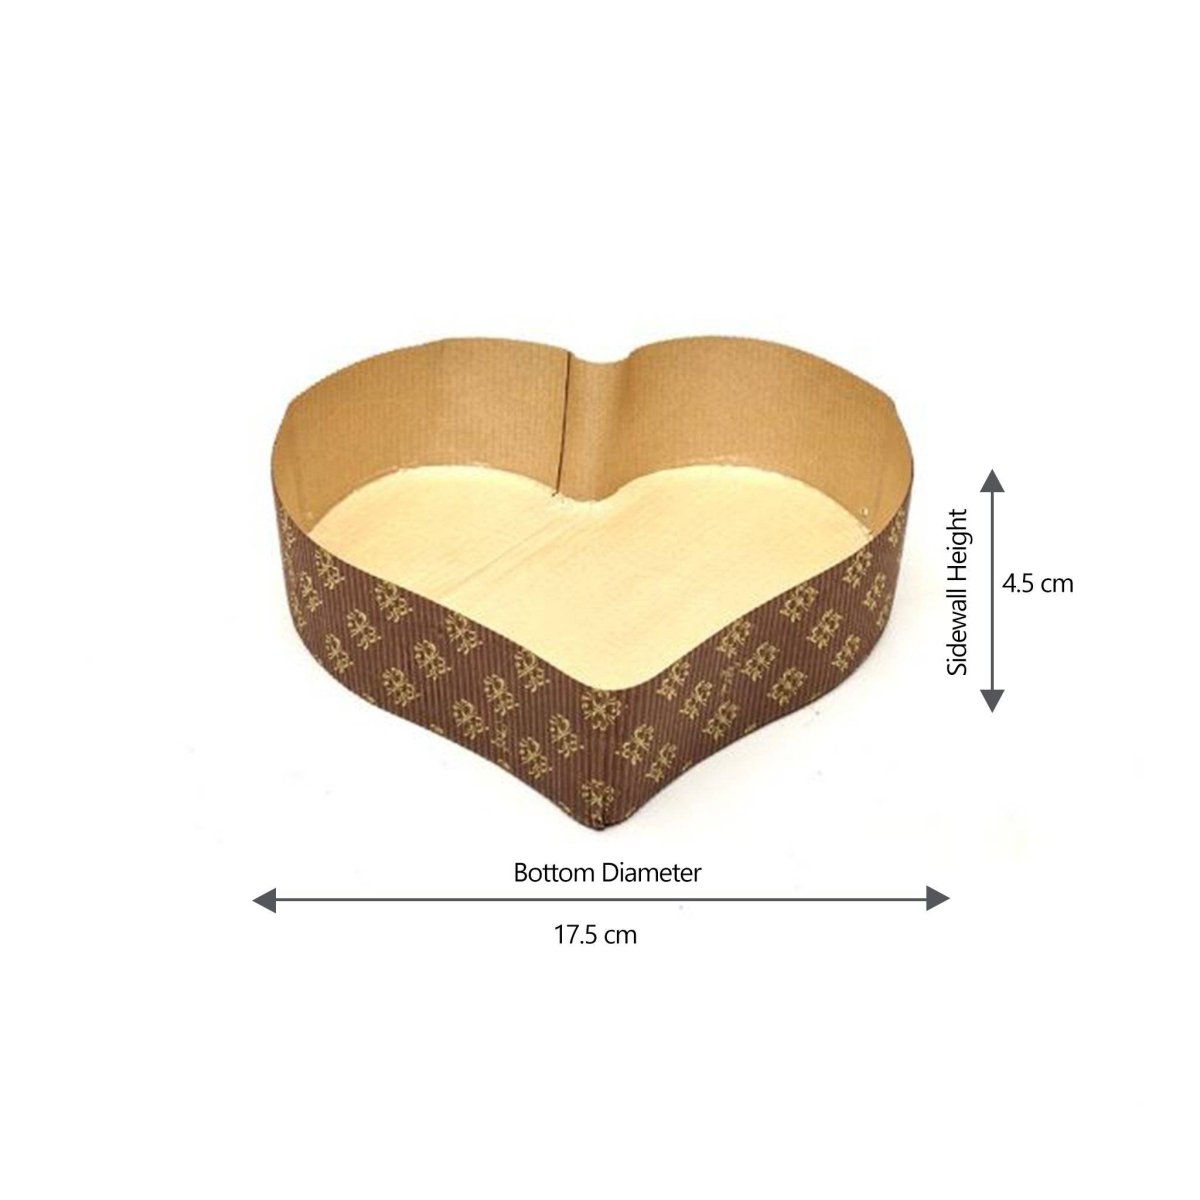 Baking Mold Heart Shape 17.5x4.5 cm |600 Pieces - hotpackwebstore.com - Baking Moulds